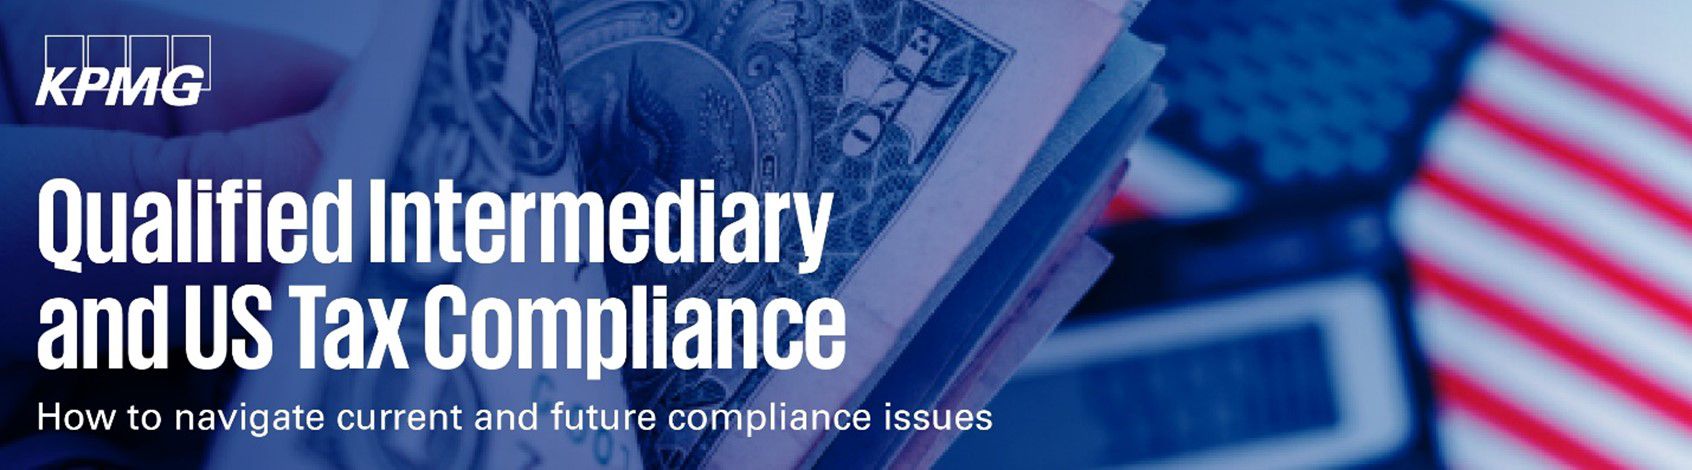 Qualified Intermediary and US Tax Compliance Webinar 